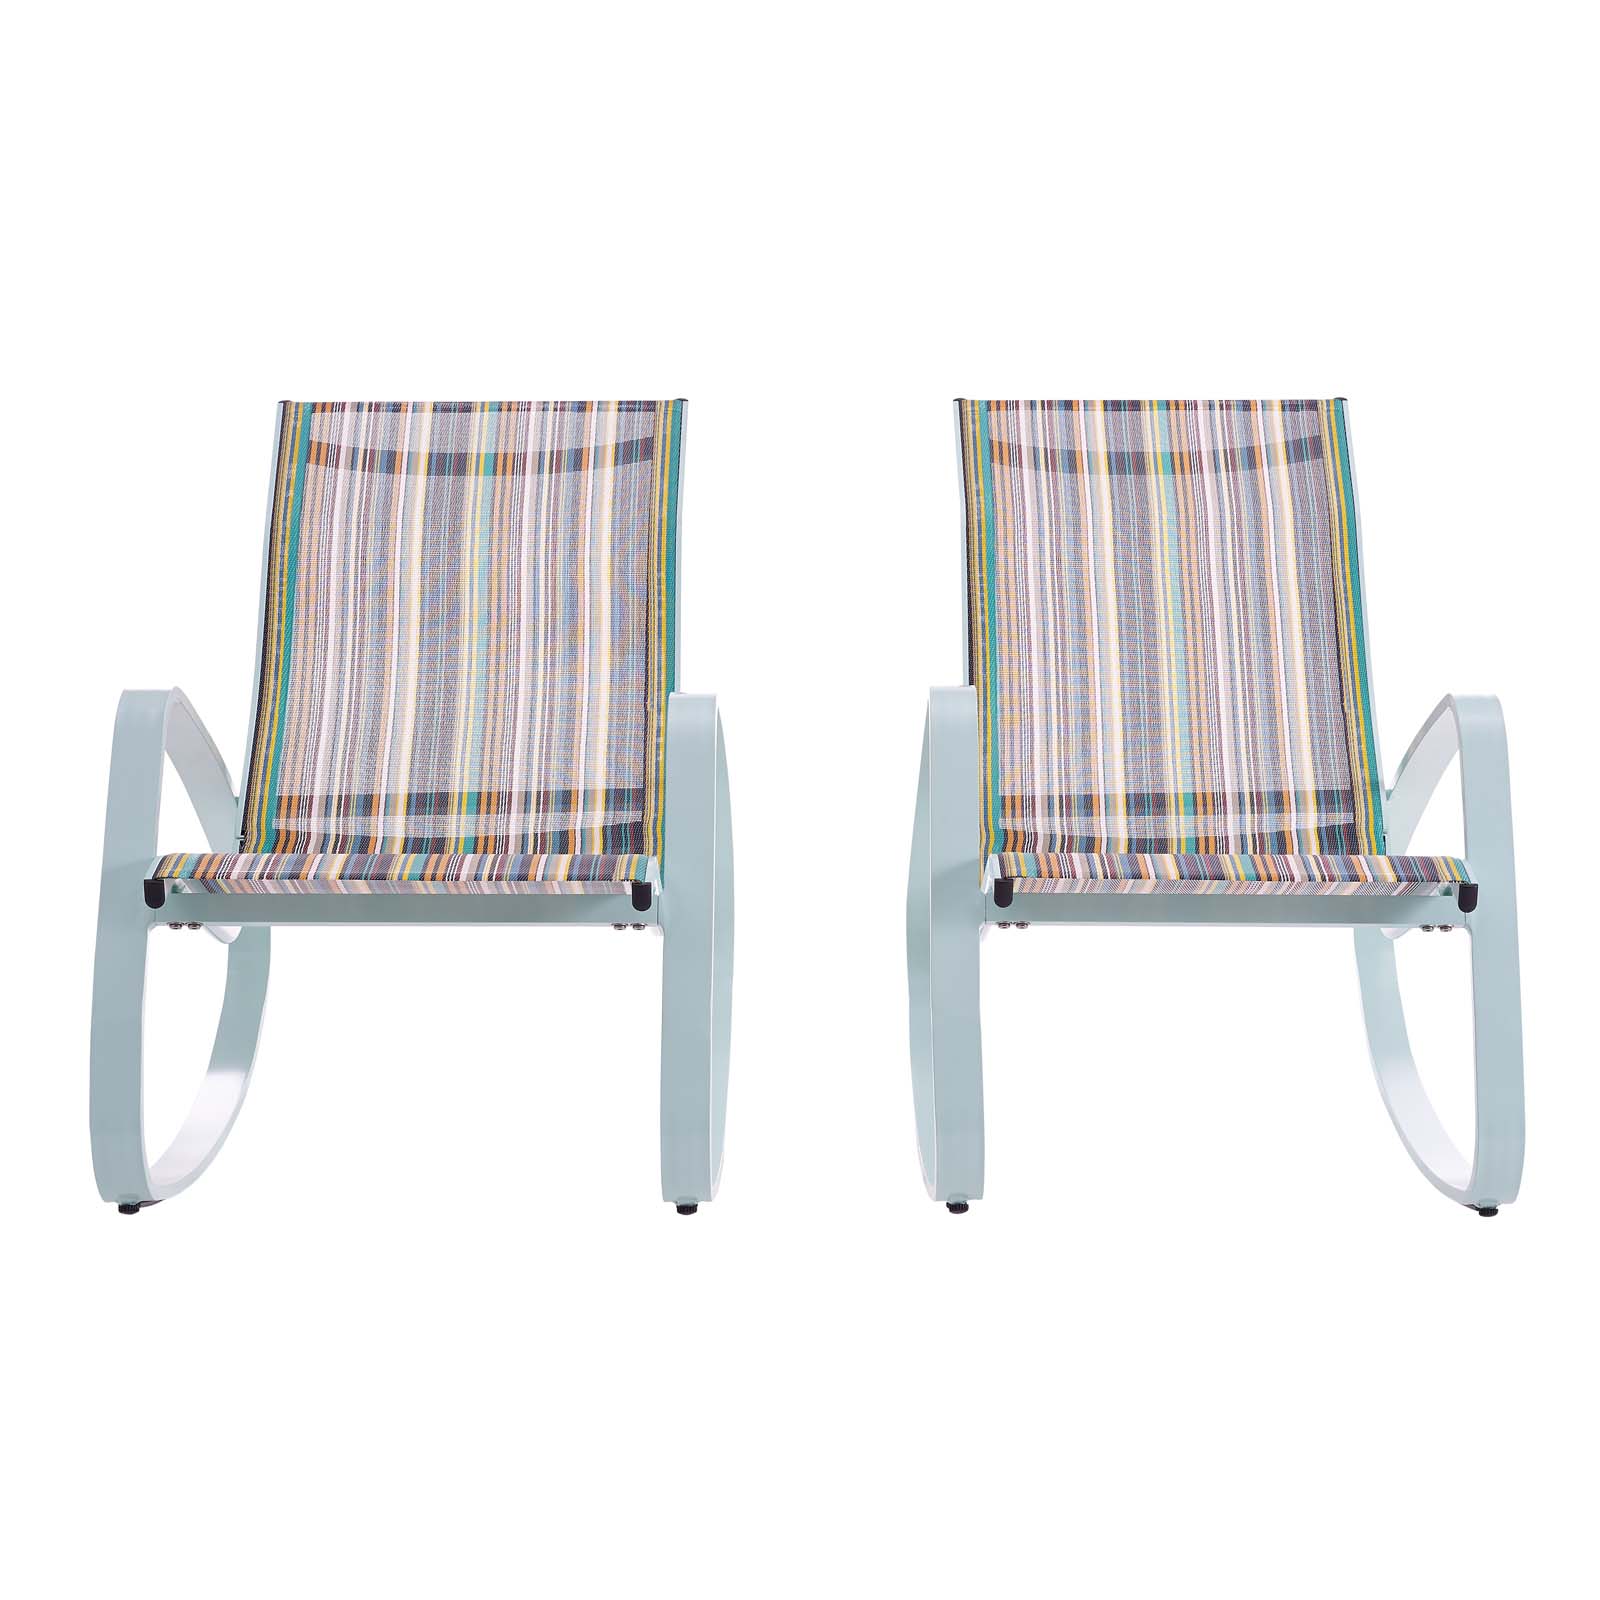 Modway Traveler Rocking Lounge Chair Outdoor Patio Mesh Sling Set of 2 in Green Stripe - image 4 of 6